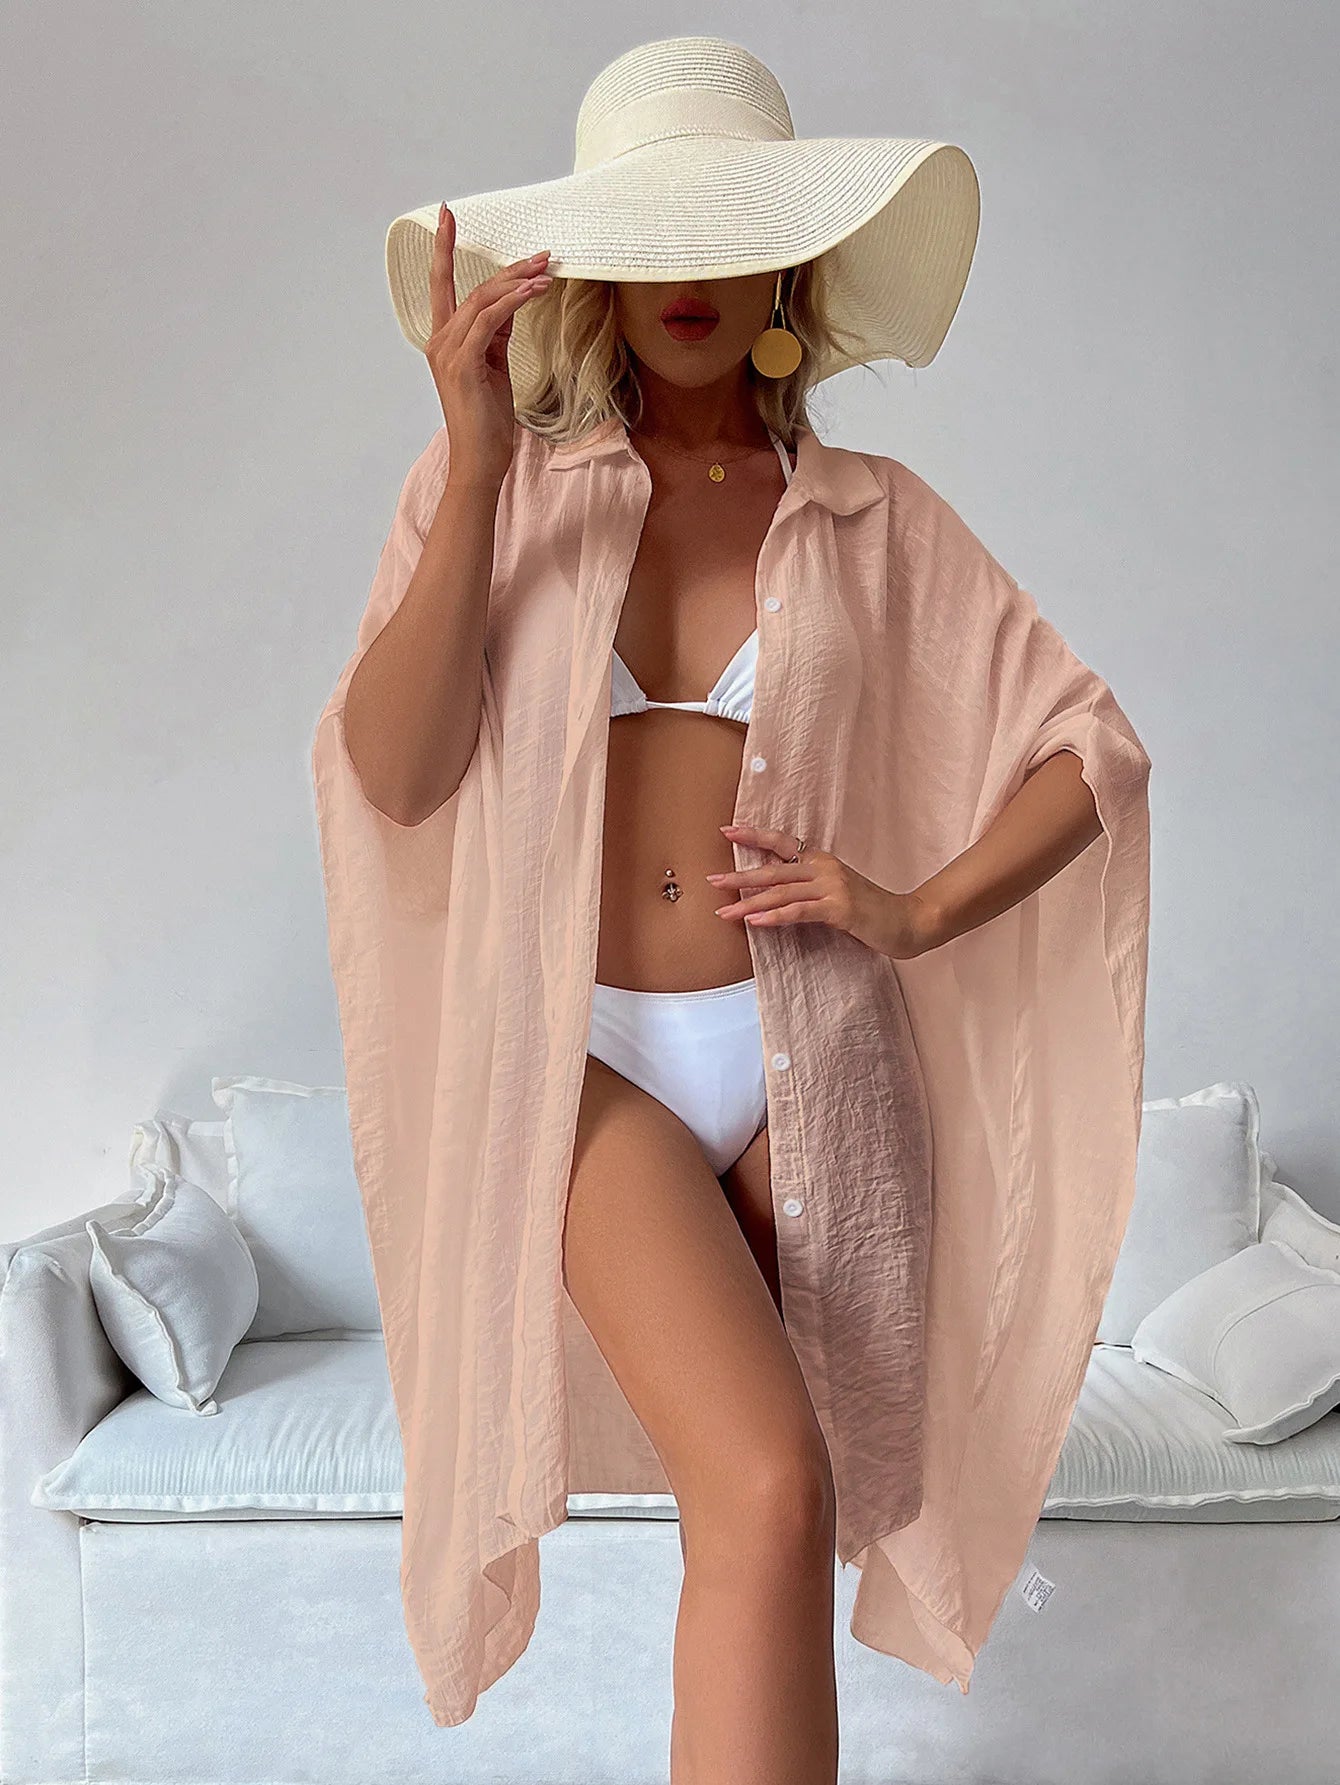 Summer Loose Cardigan Sun Protection Sarong Woman Bikini Cover-up Swimsuit Solid Beachwear Cover-Ups Swimwear Women Kimono dress